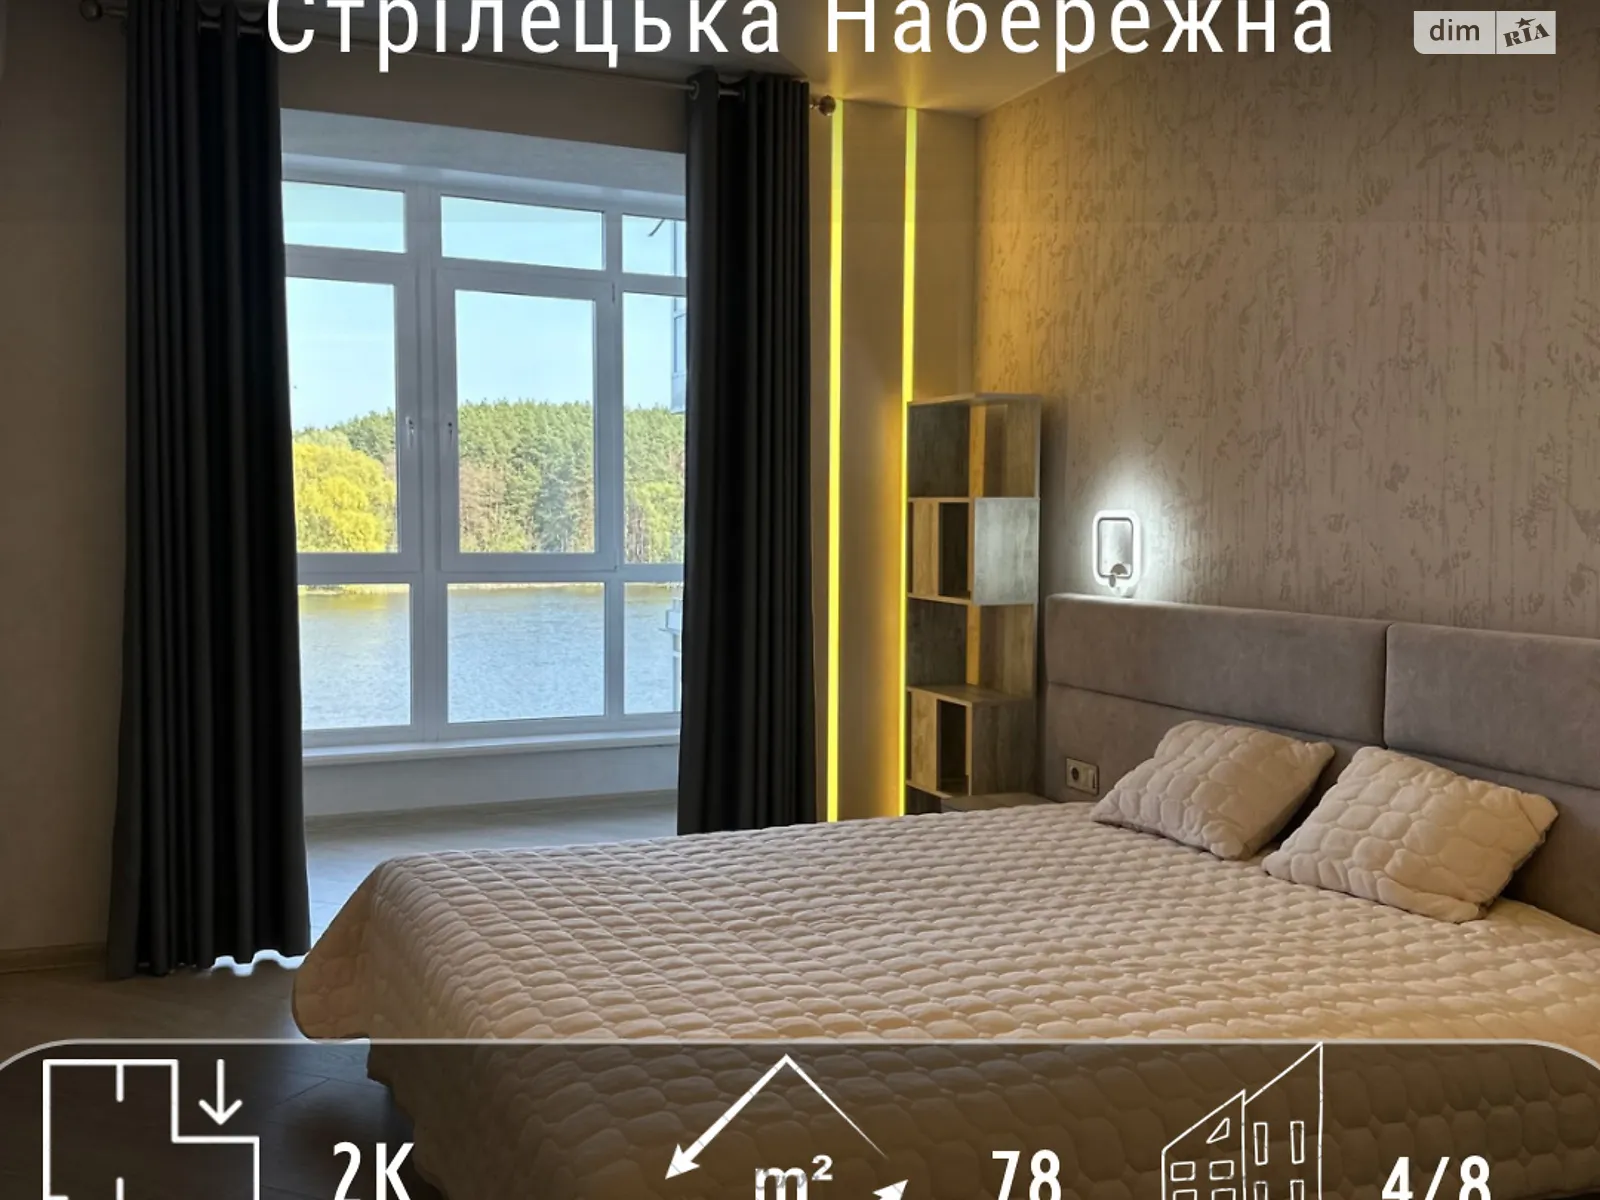 Продается 2-комнатная квартира 78 кв. м в Чернигове - фото 1